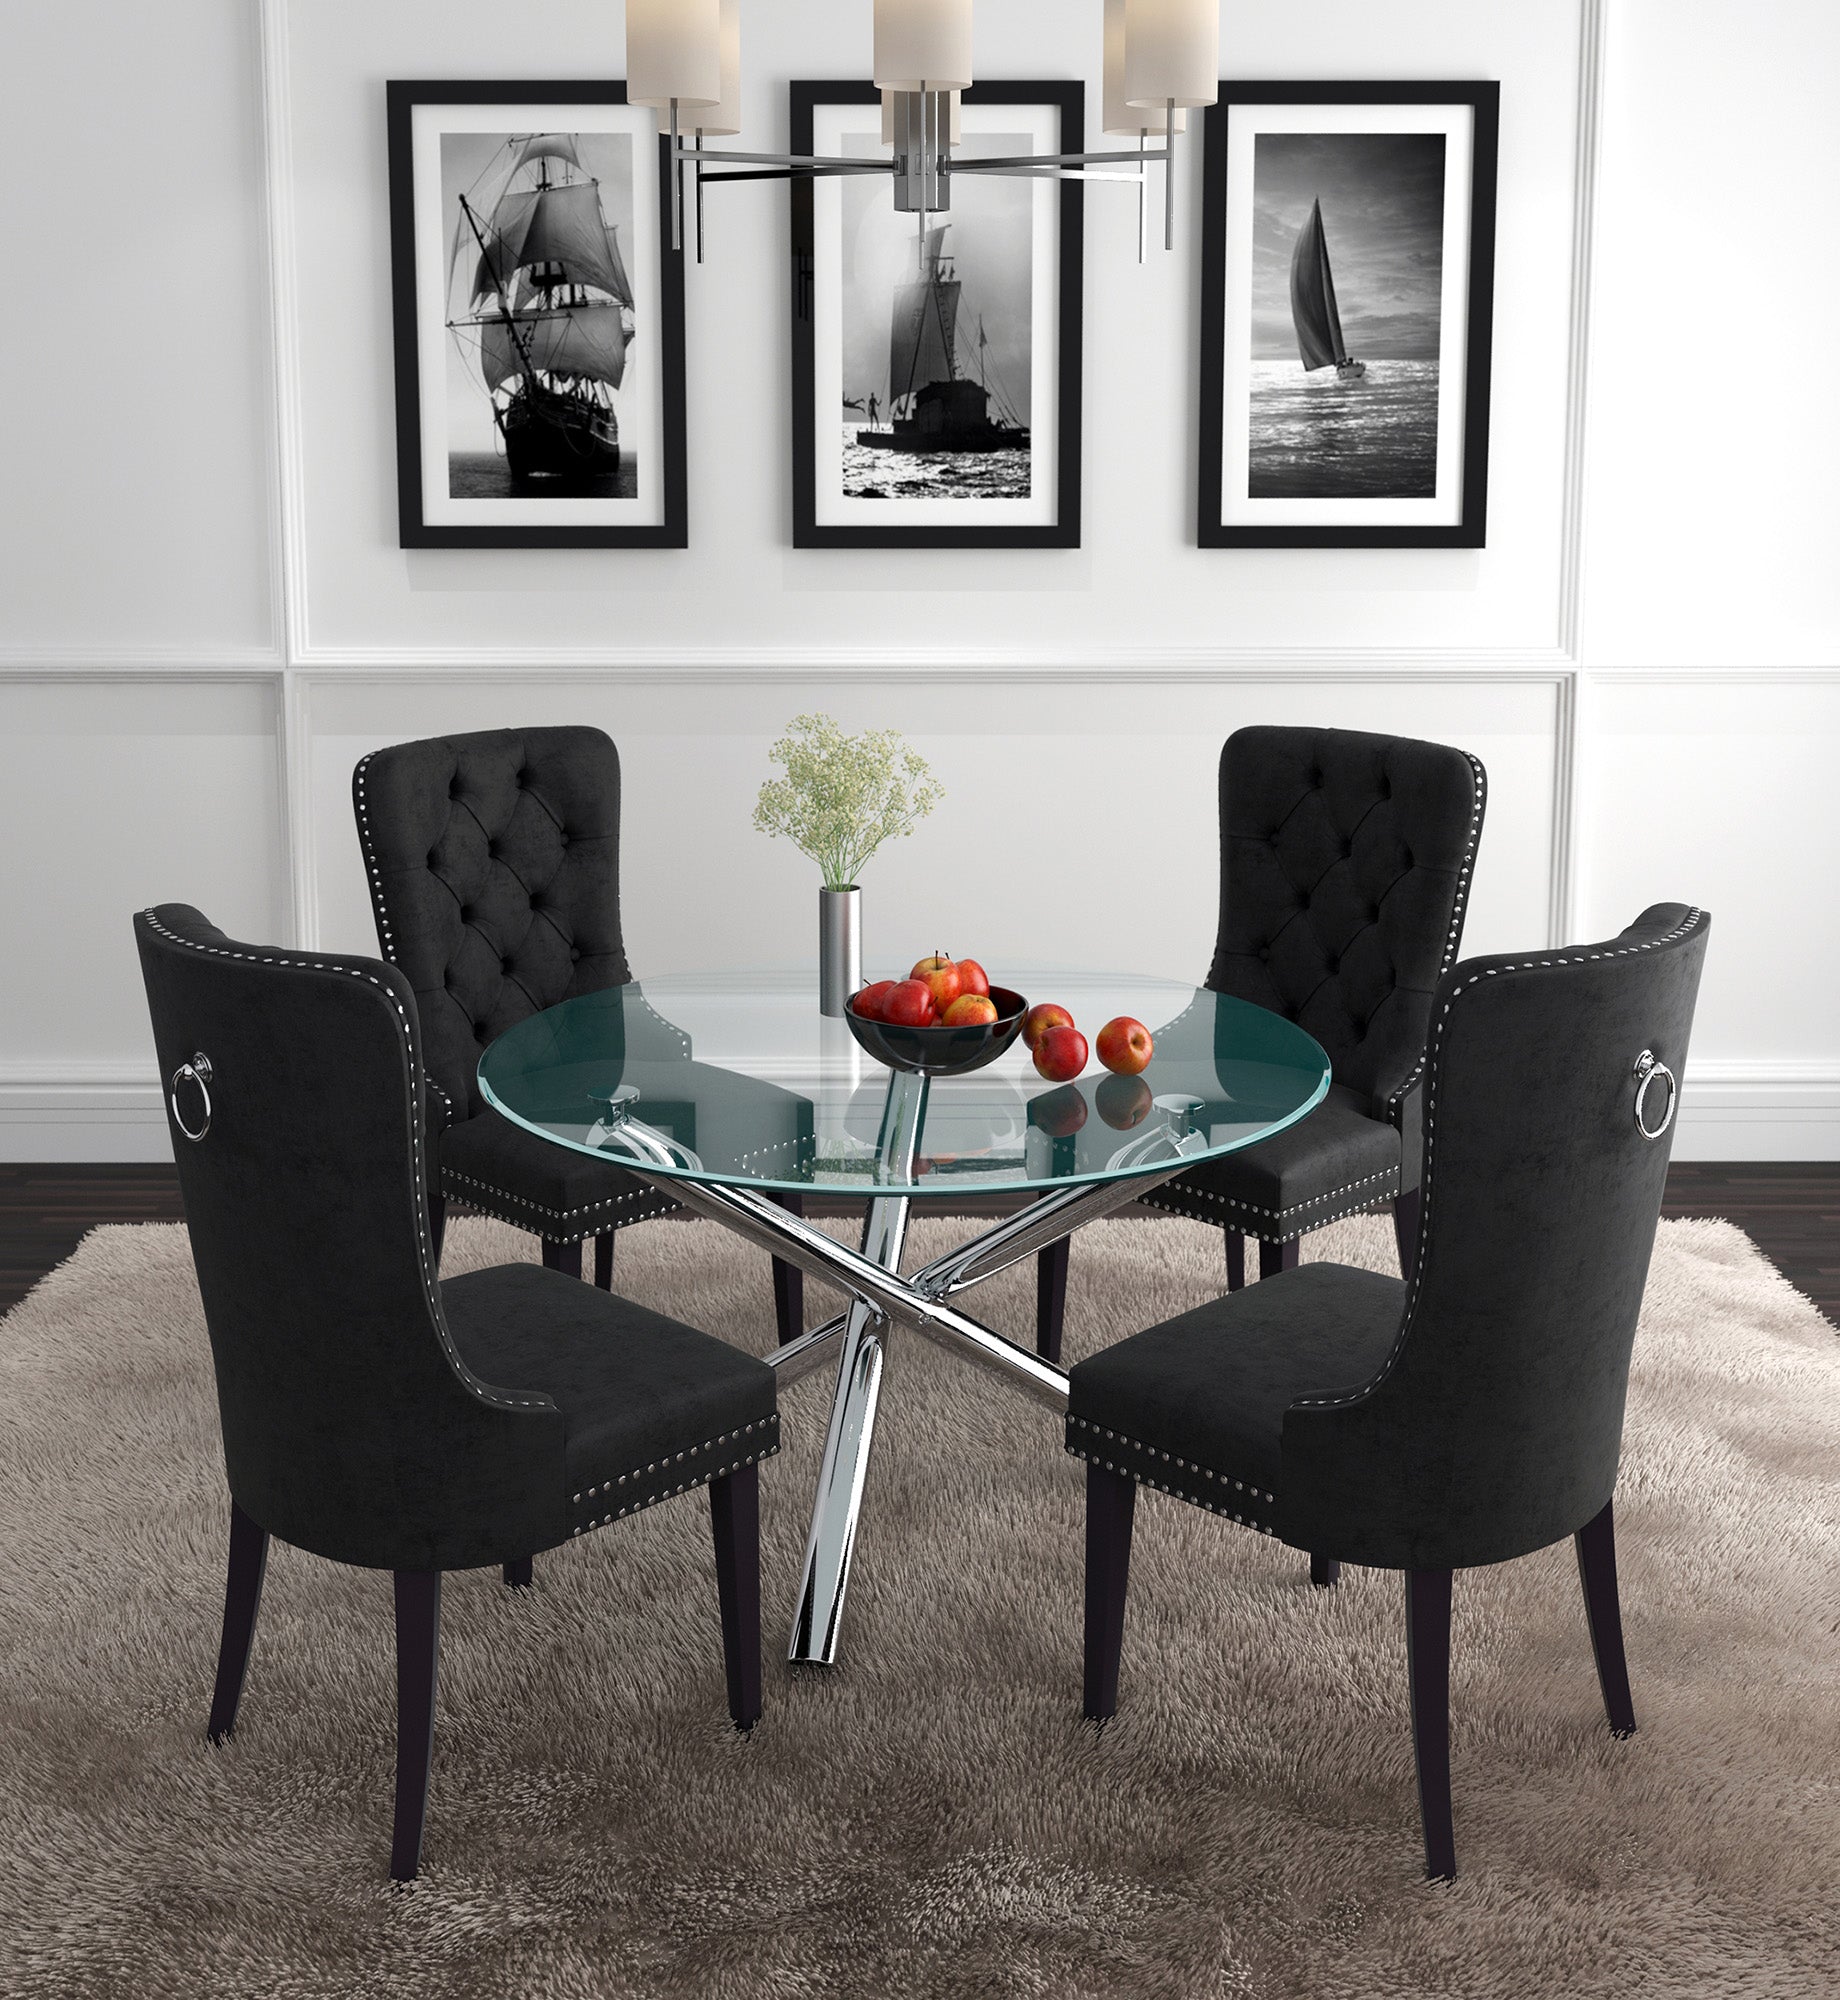 SOLARA II-DINING TABLE, 40"DIA - CHROME / RIZZO BLACK CHAIRS - 5PC DINING SET